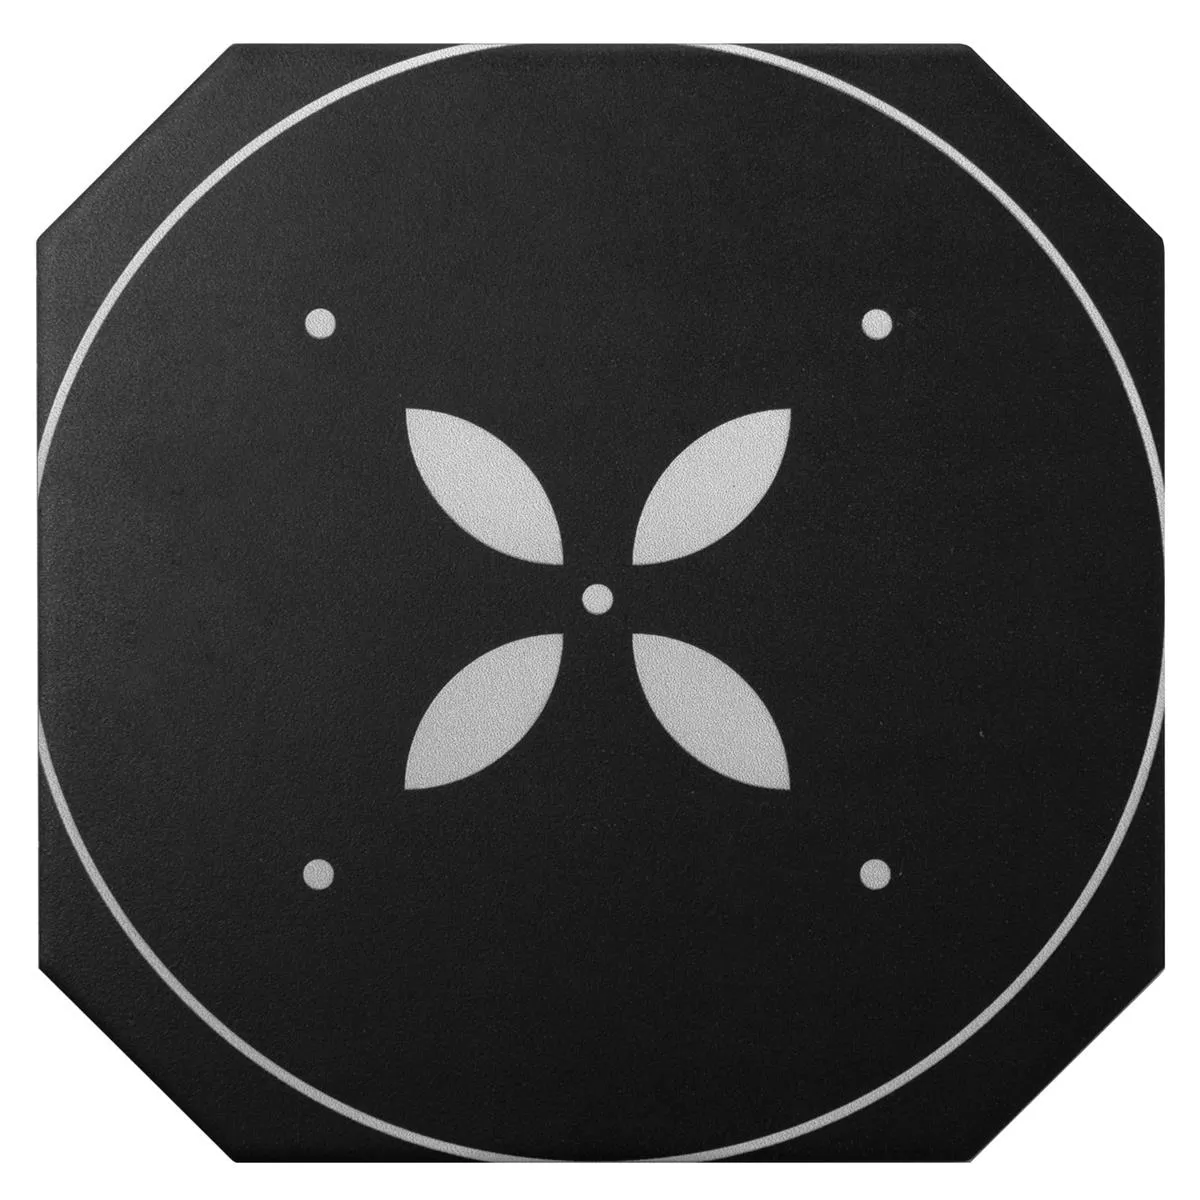 Порцеланови Kаменинови Изделия Плочки Genexia Черно Бяло Decor 2 Осмоъгълник 20x20cm